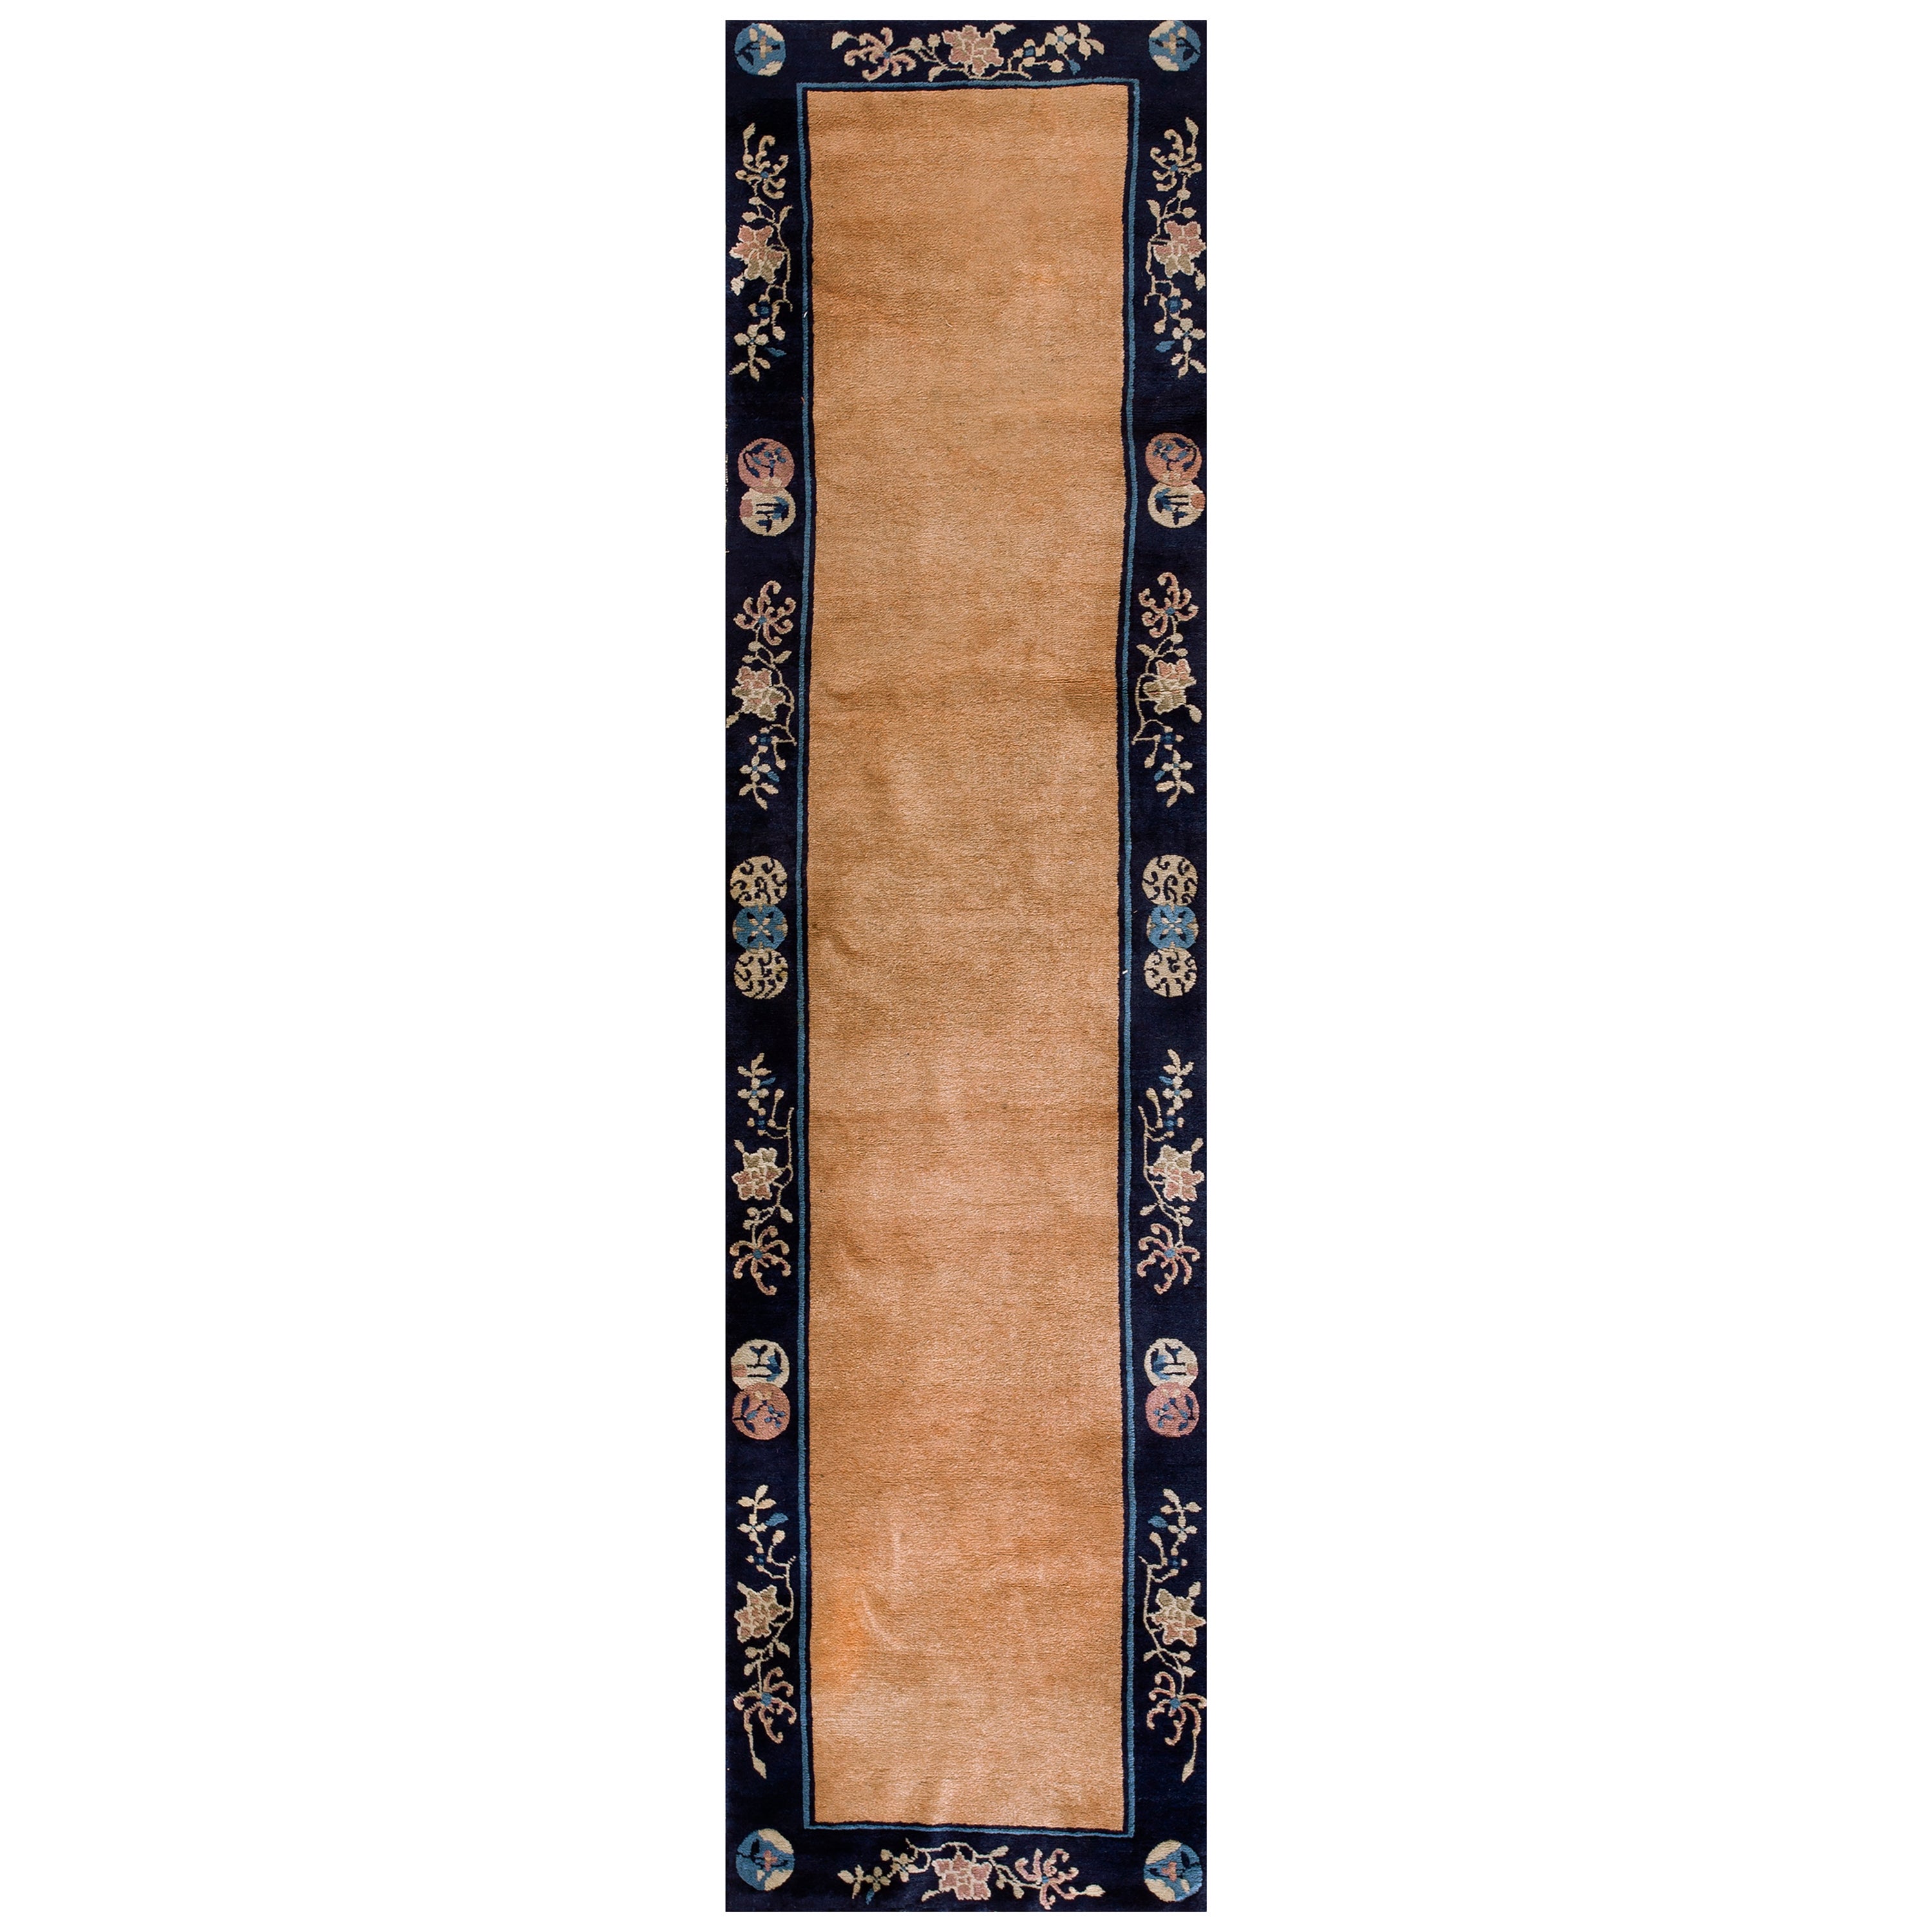 Early 20th Century Chinese Peking Carpet ( 2'4" x 8'9" - 71 x 267 )